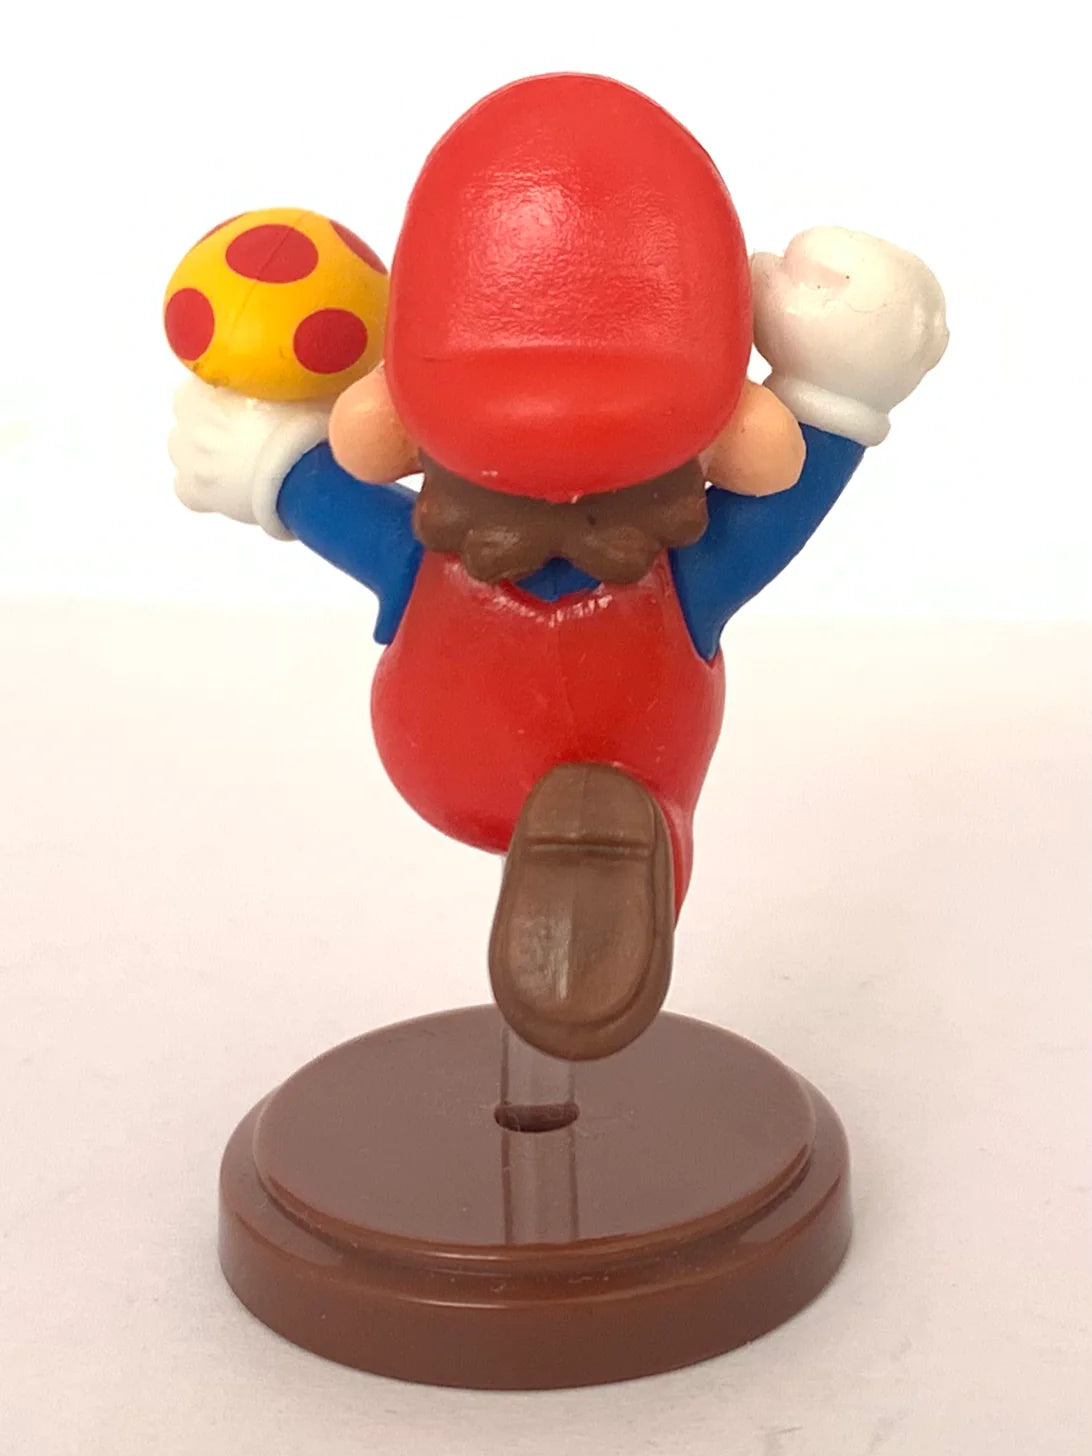 Nintendo Furuta Super Mario Brothers Mario Mushroom